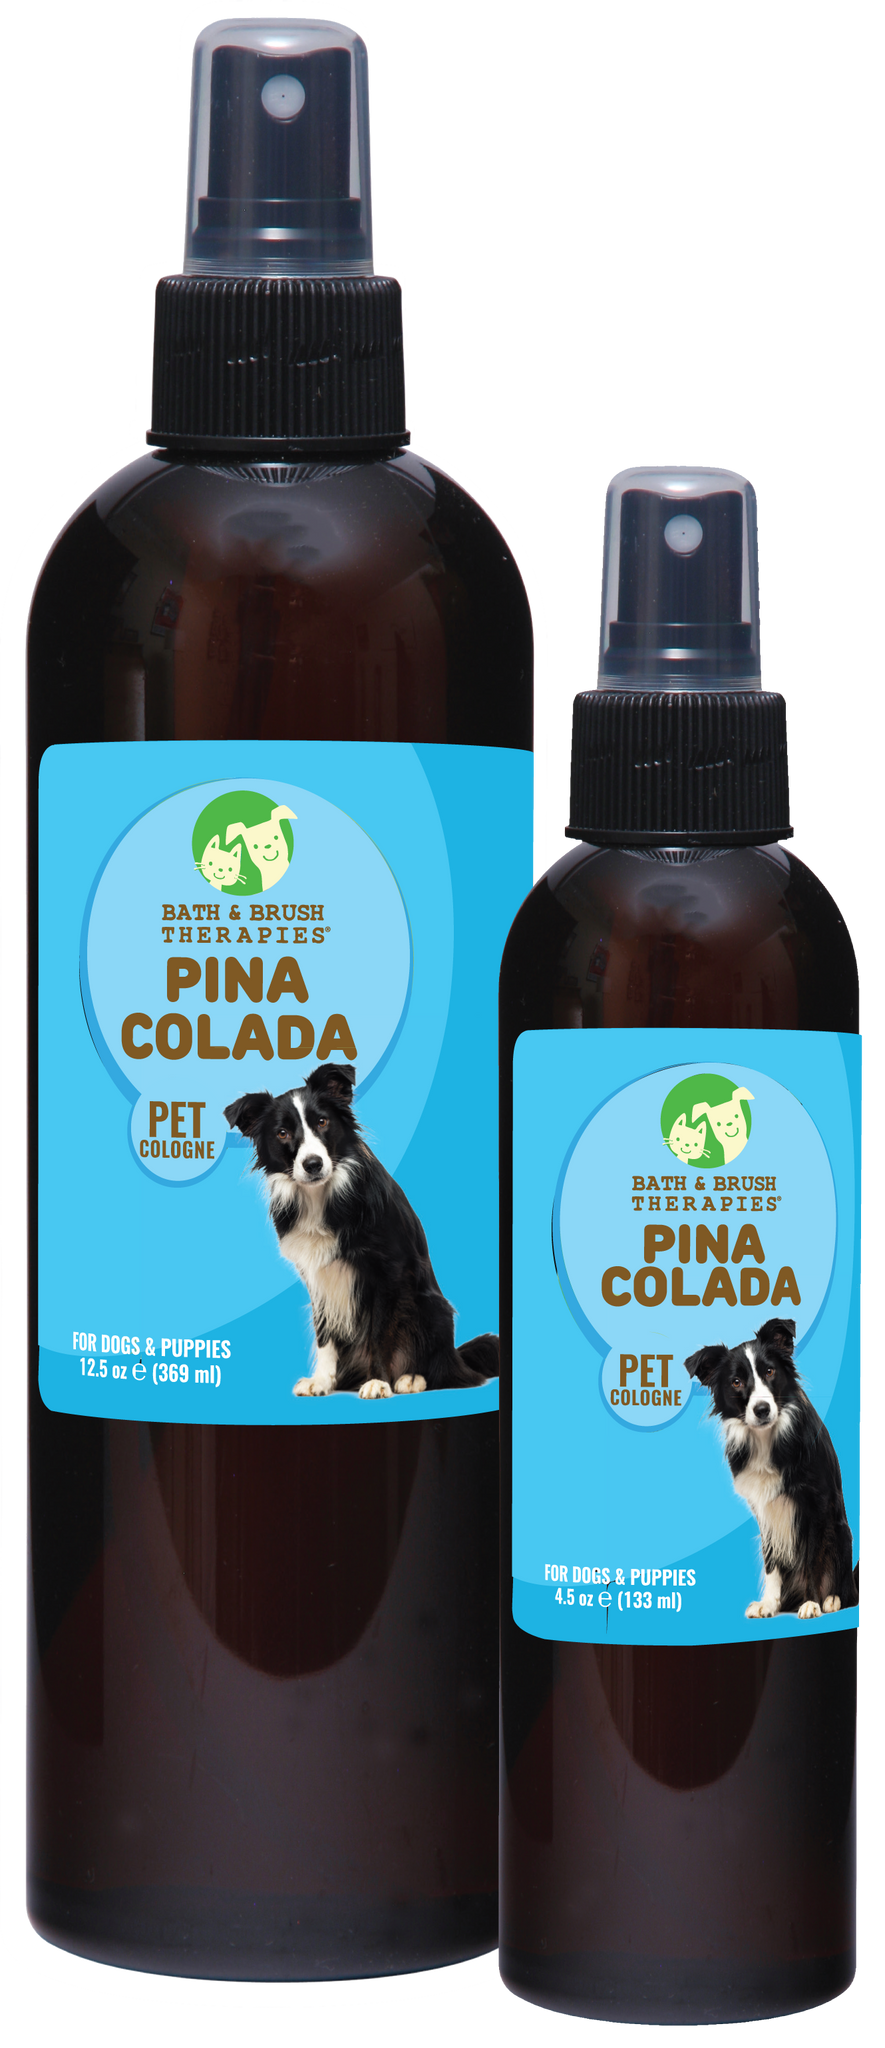 Pina Colada Pet Cologne | Bath & Brush Therapies®